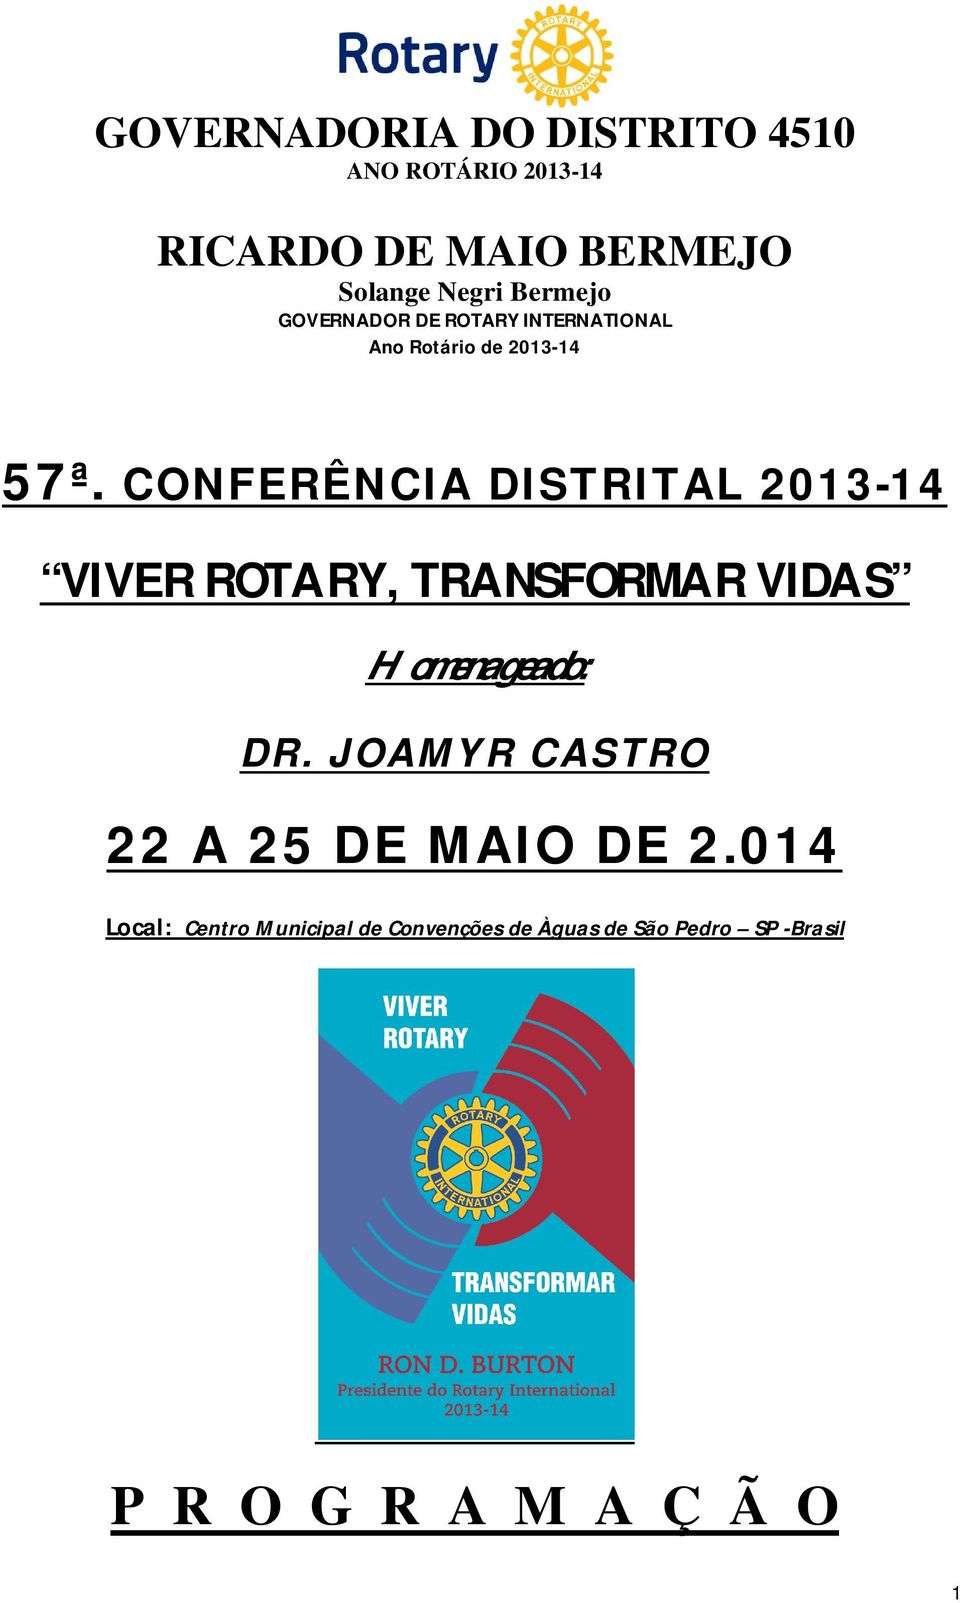 CONFERÊNCIA DISTRITAL 2013-14 VIVER ROTARY, TRANSFORMAR VIDAS Homenageado: DR.